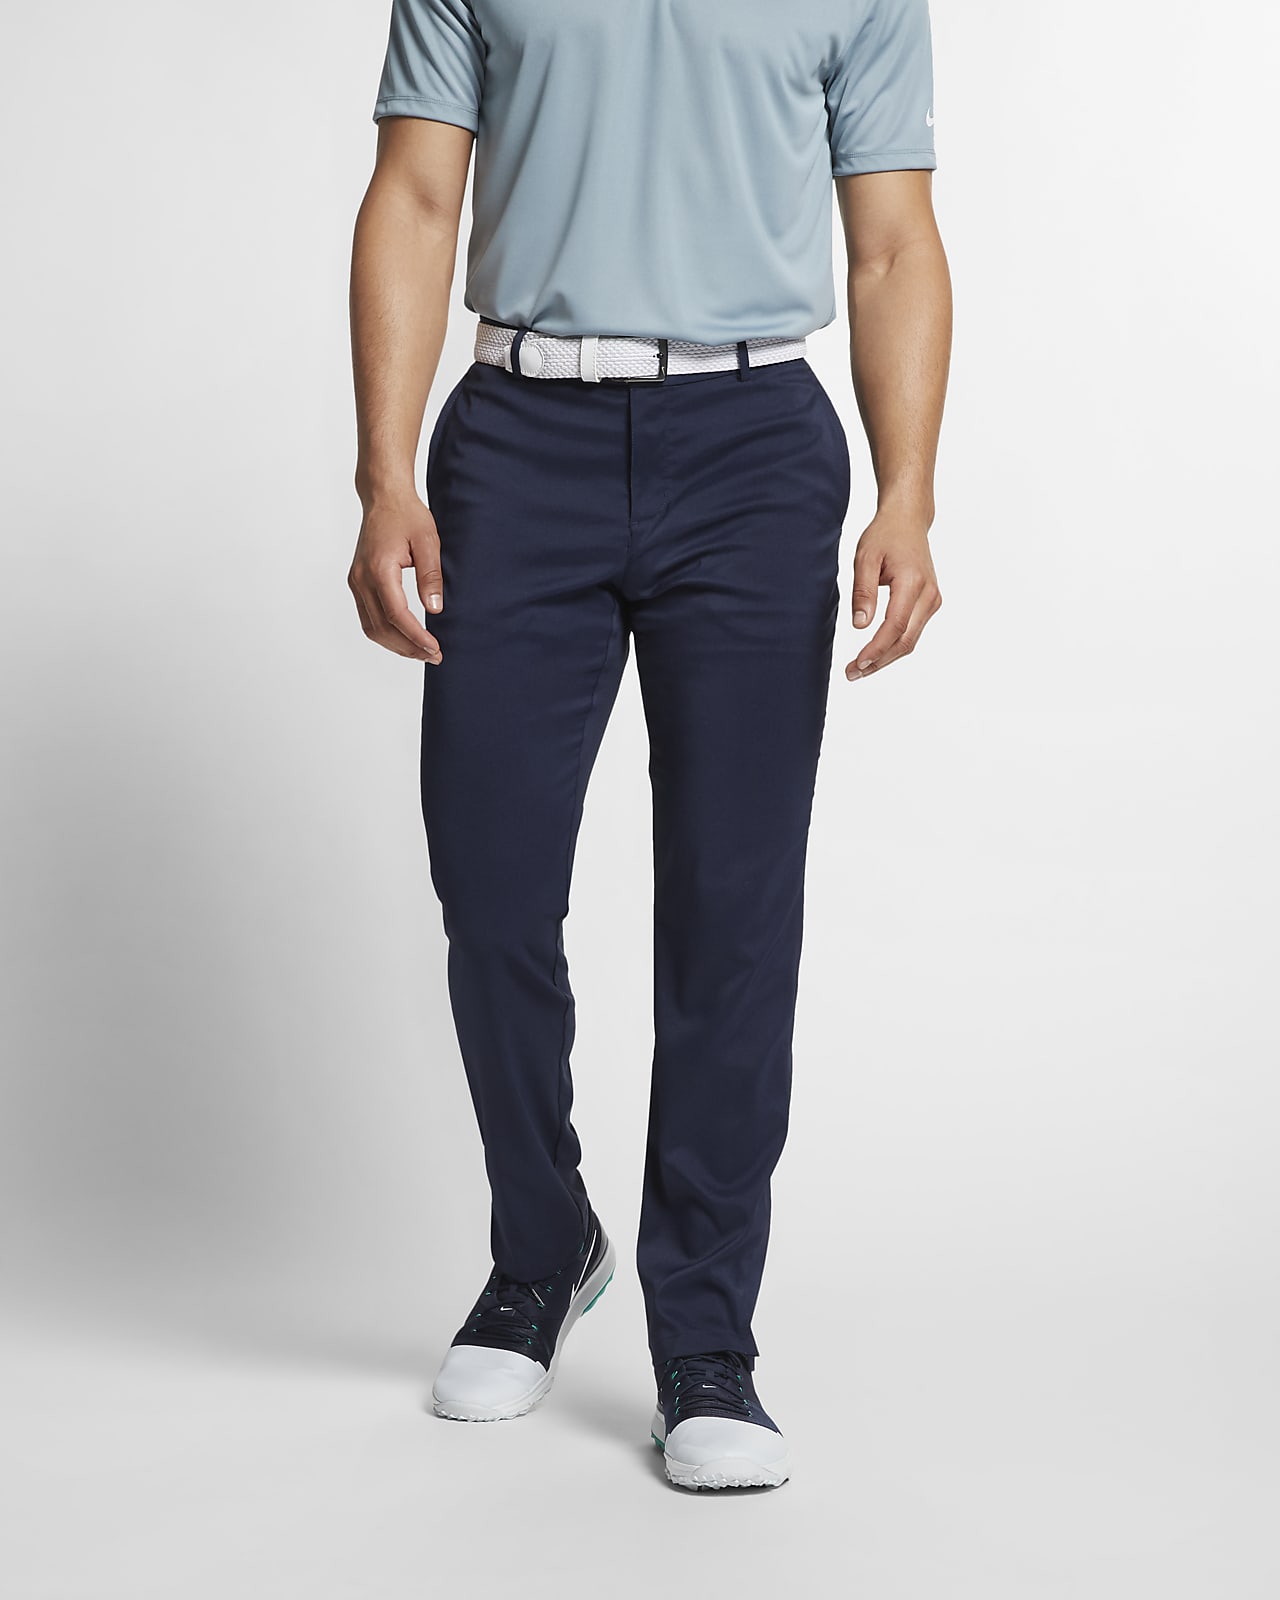 Nike Flex Men's Golf Pants